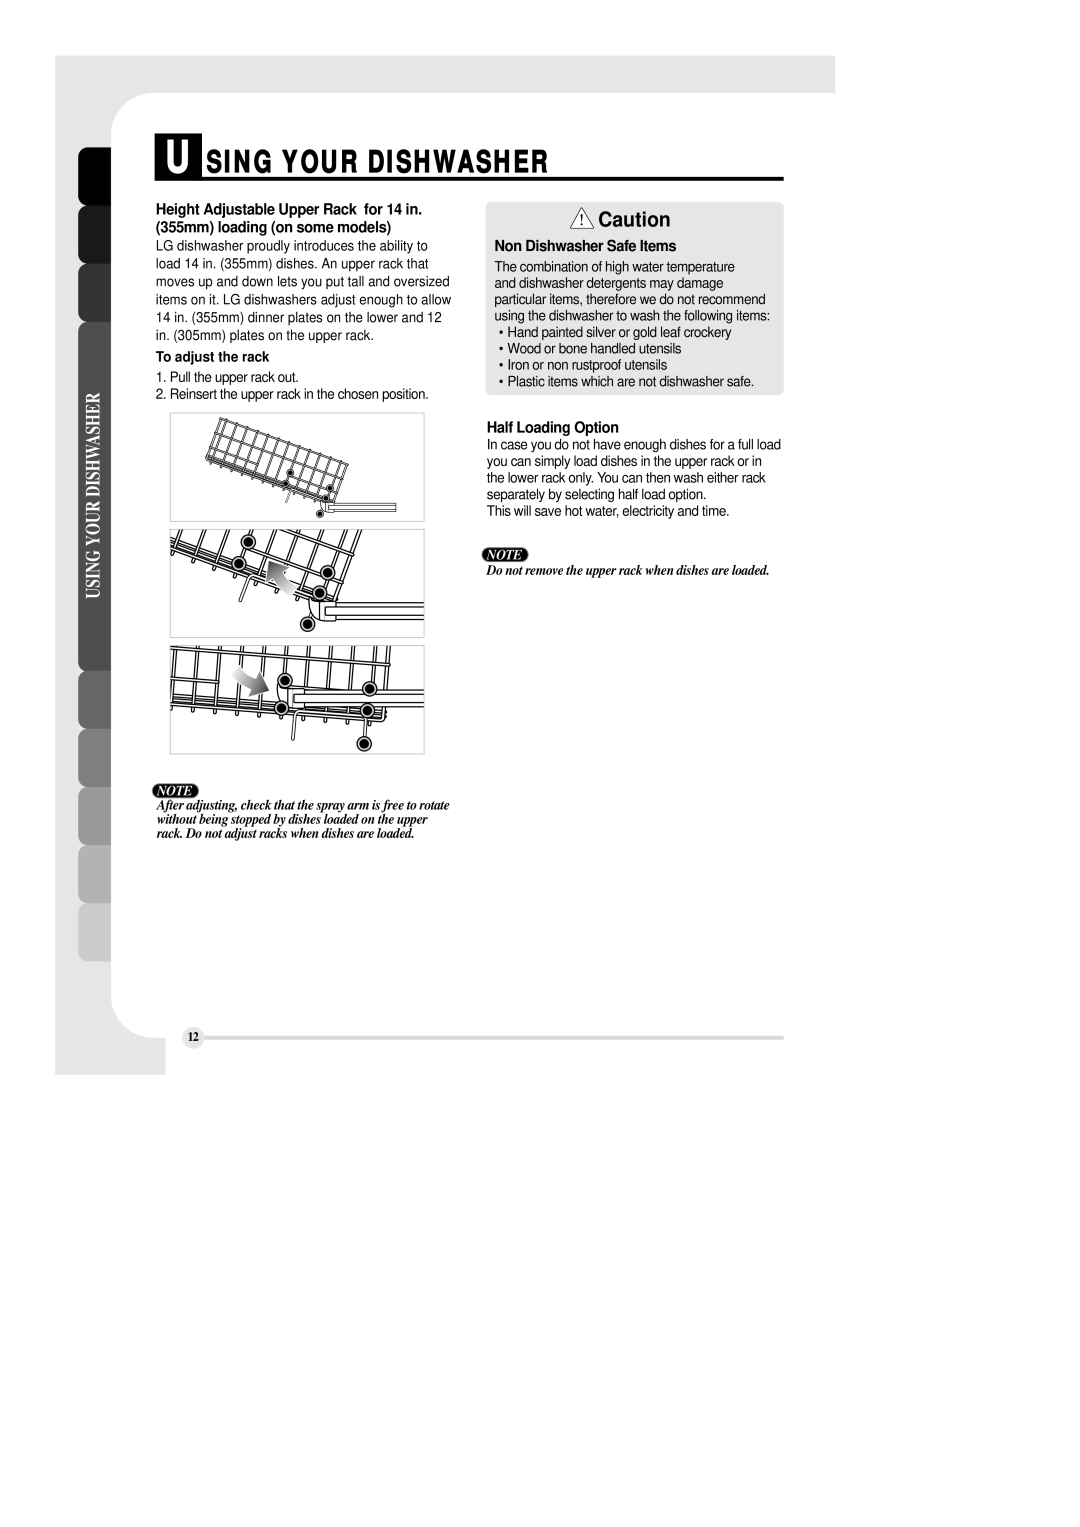 LG Electronics LDS 5811ST manual Non Dishwasher Safe Items, Half Loading Option, U Sing Your Dishwasher, To adjust the rack 